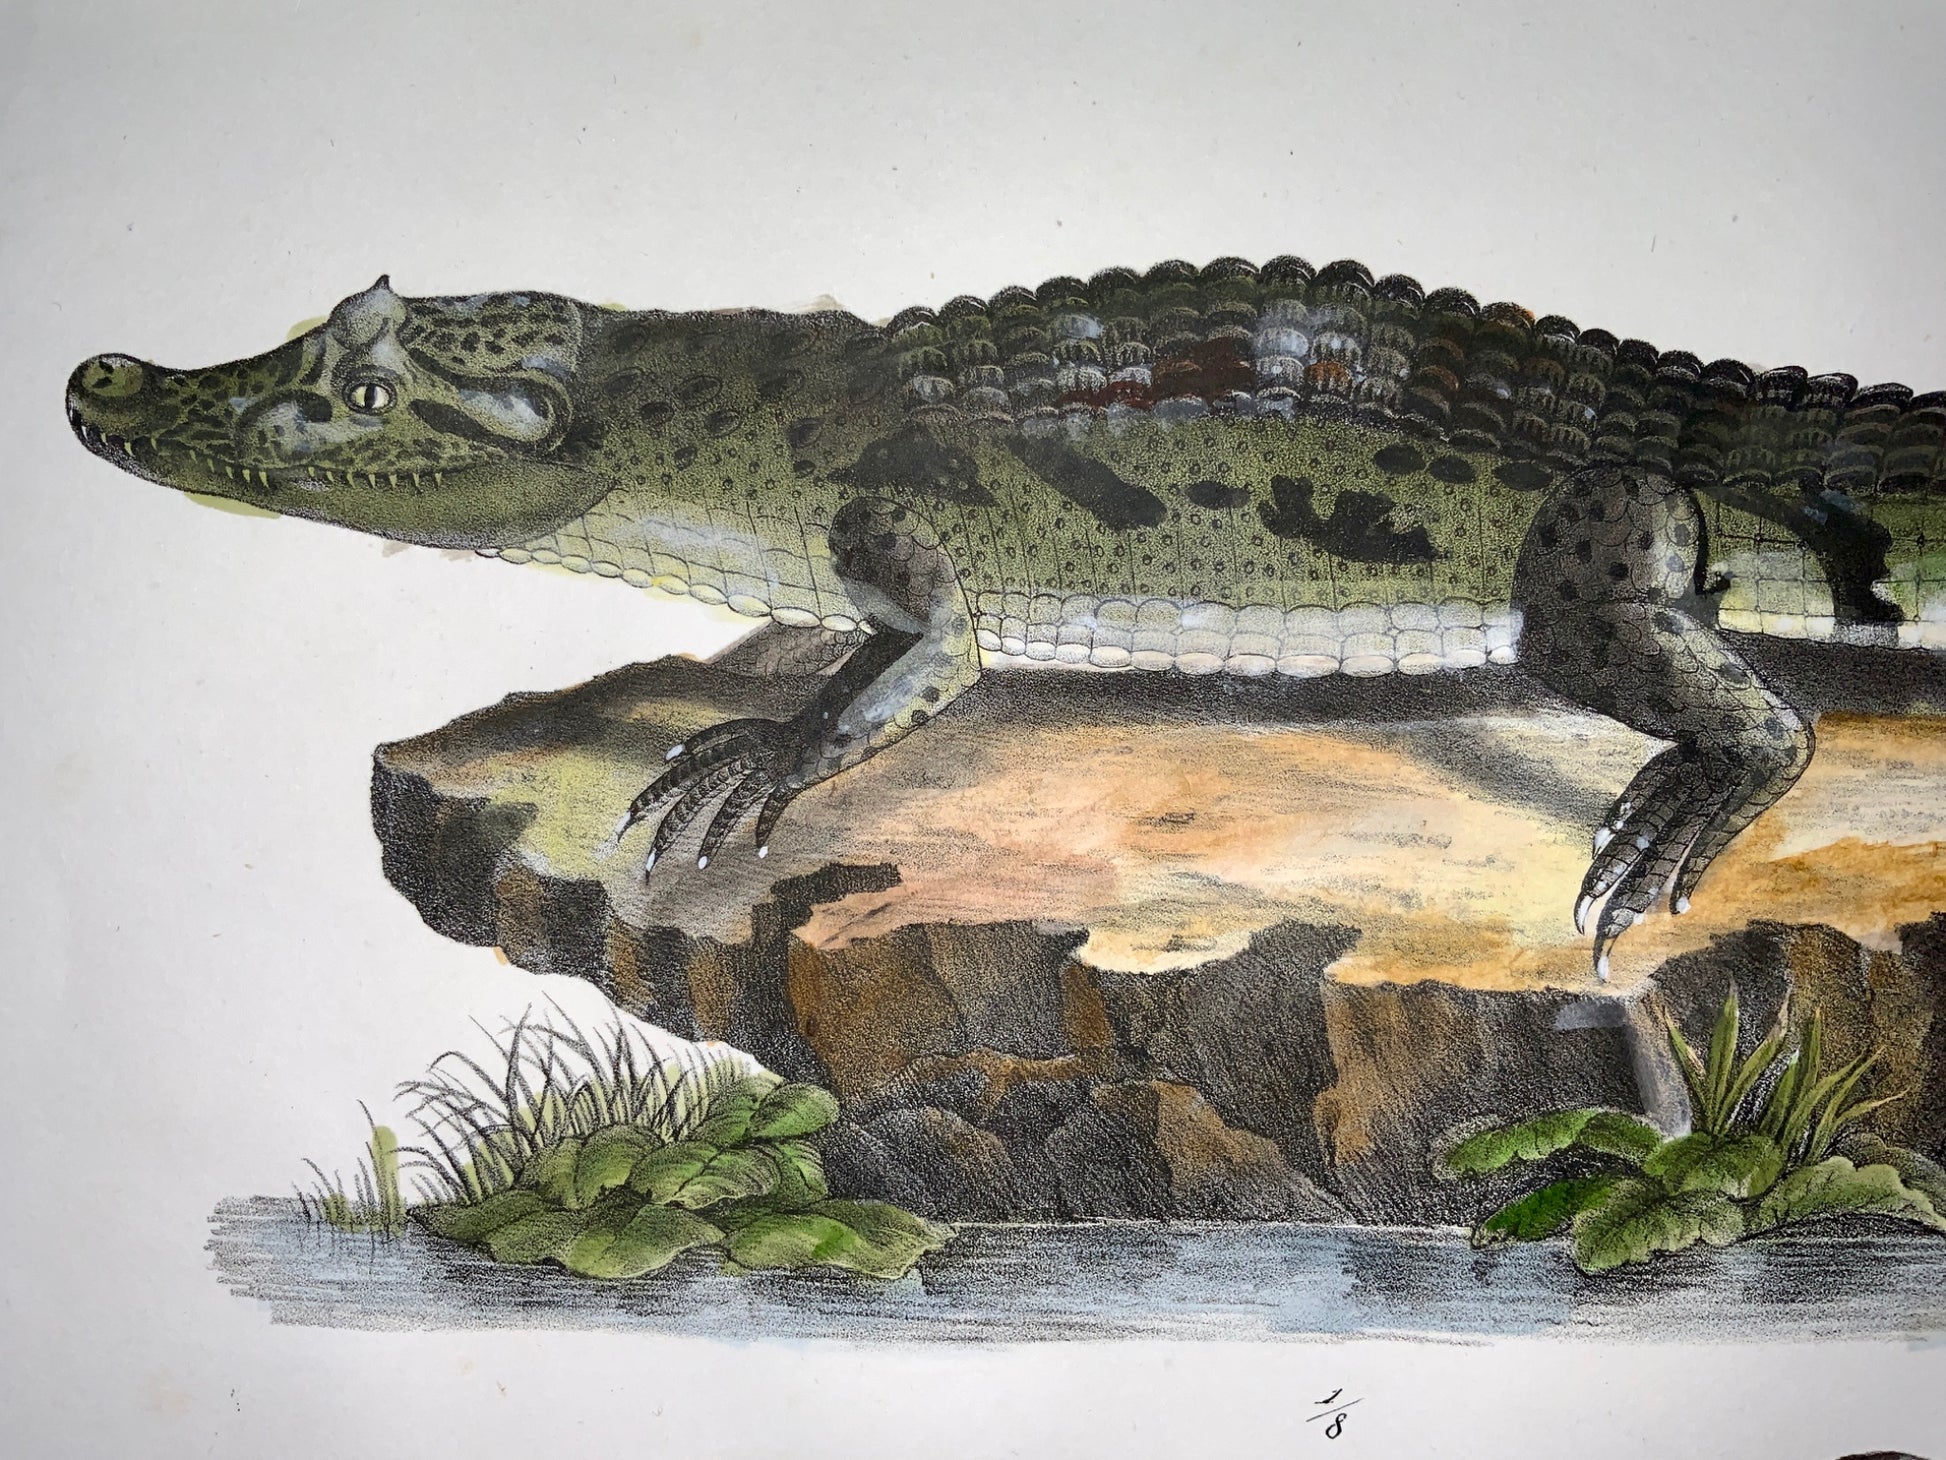 1833 H.R. Schinz (1777-1861) - GANGES CROCODILE - Hand colour stone lithograph - Reptiles